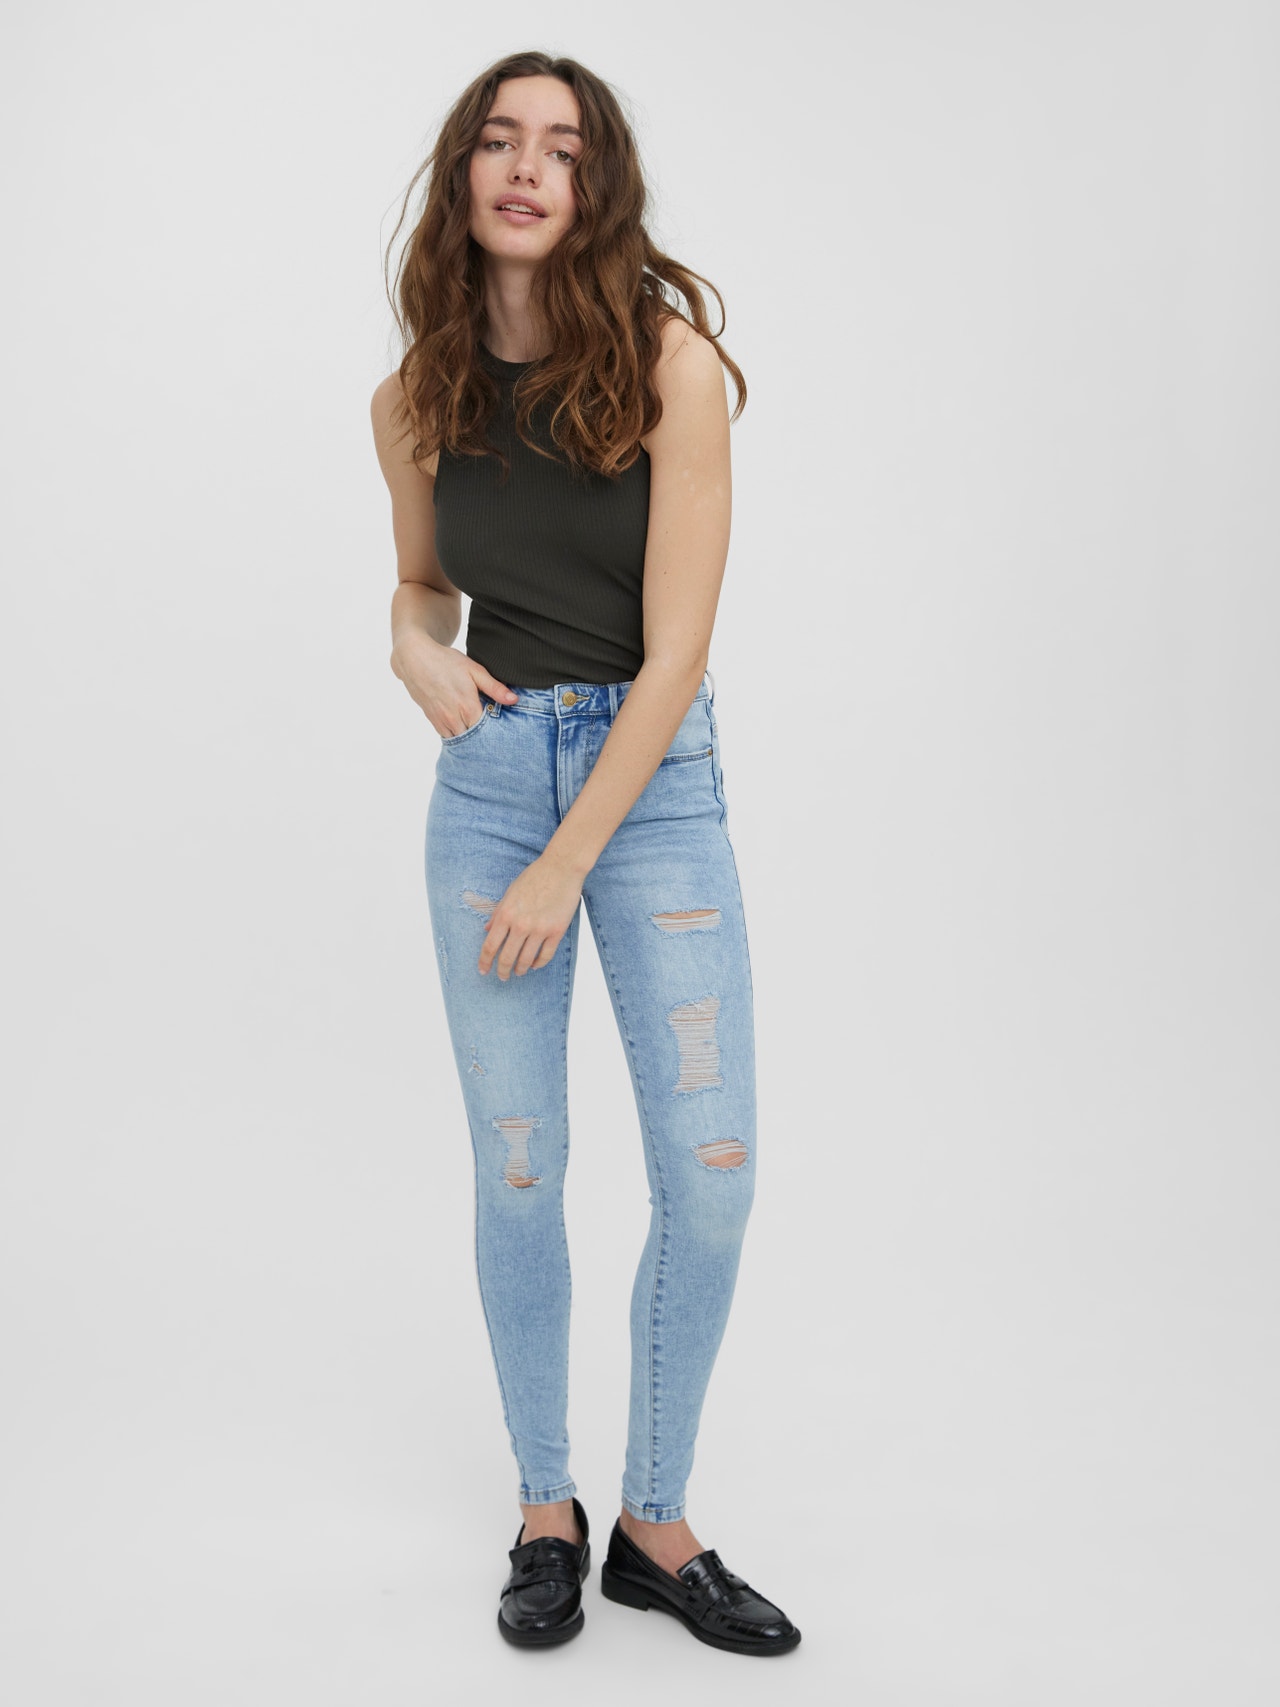 VMSOPHIA High with | Moda® rise Vero 50% discount! Jeans